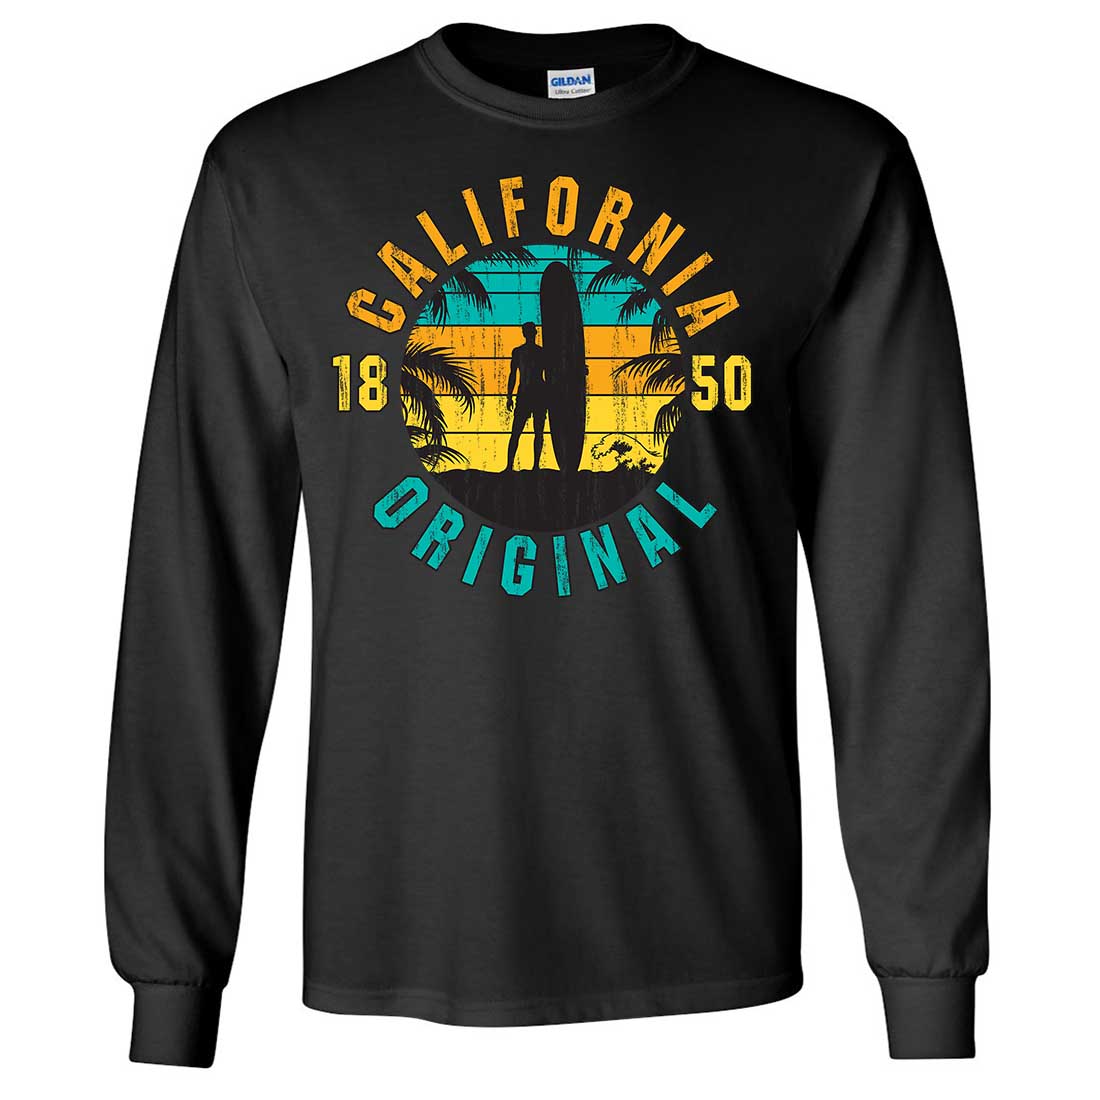 California Original Vintage Surfer Long Sleeve Shirt